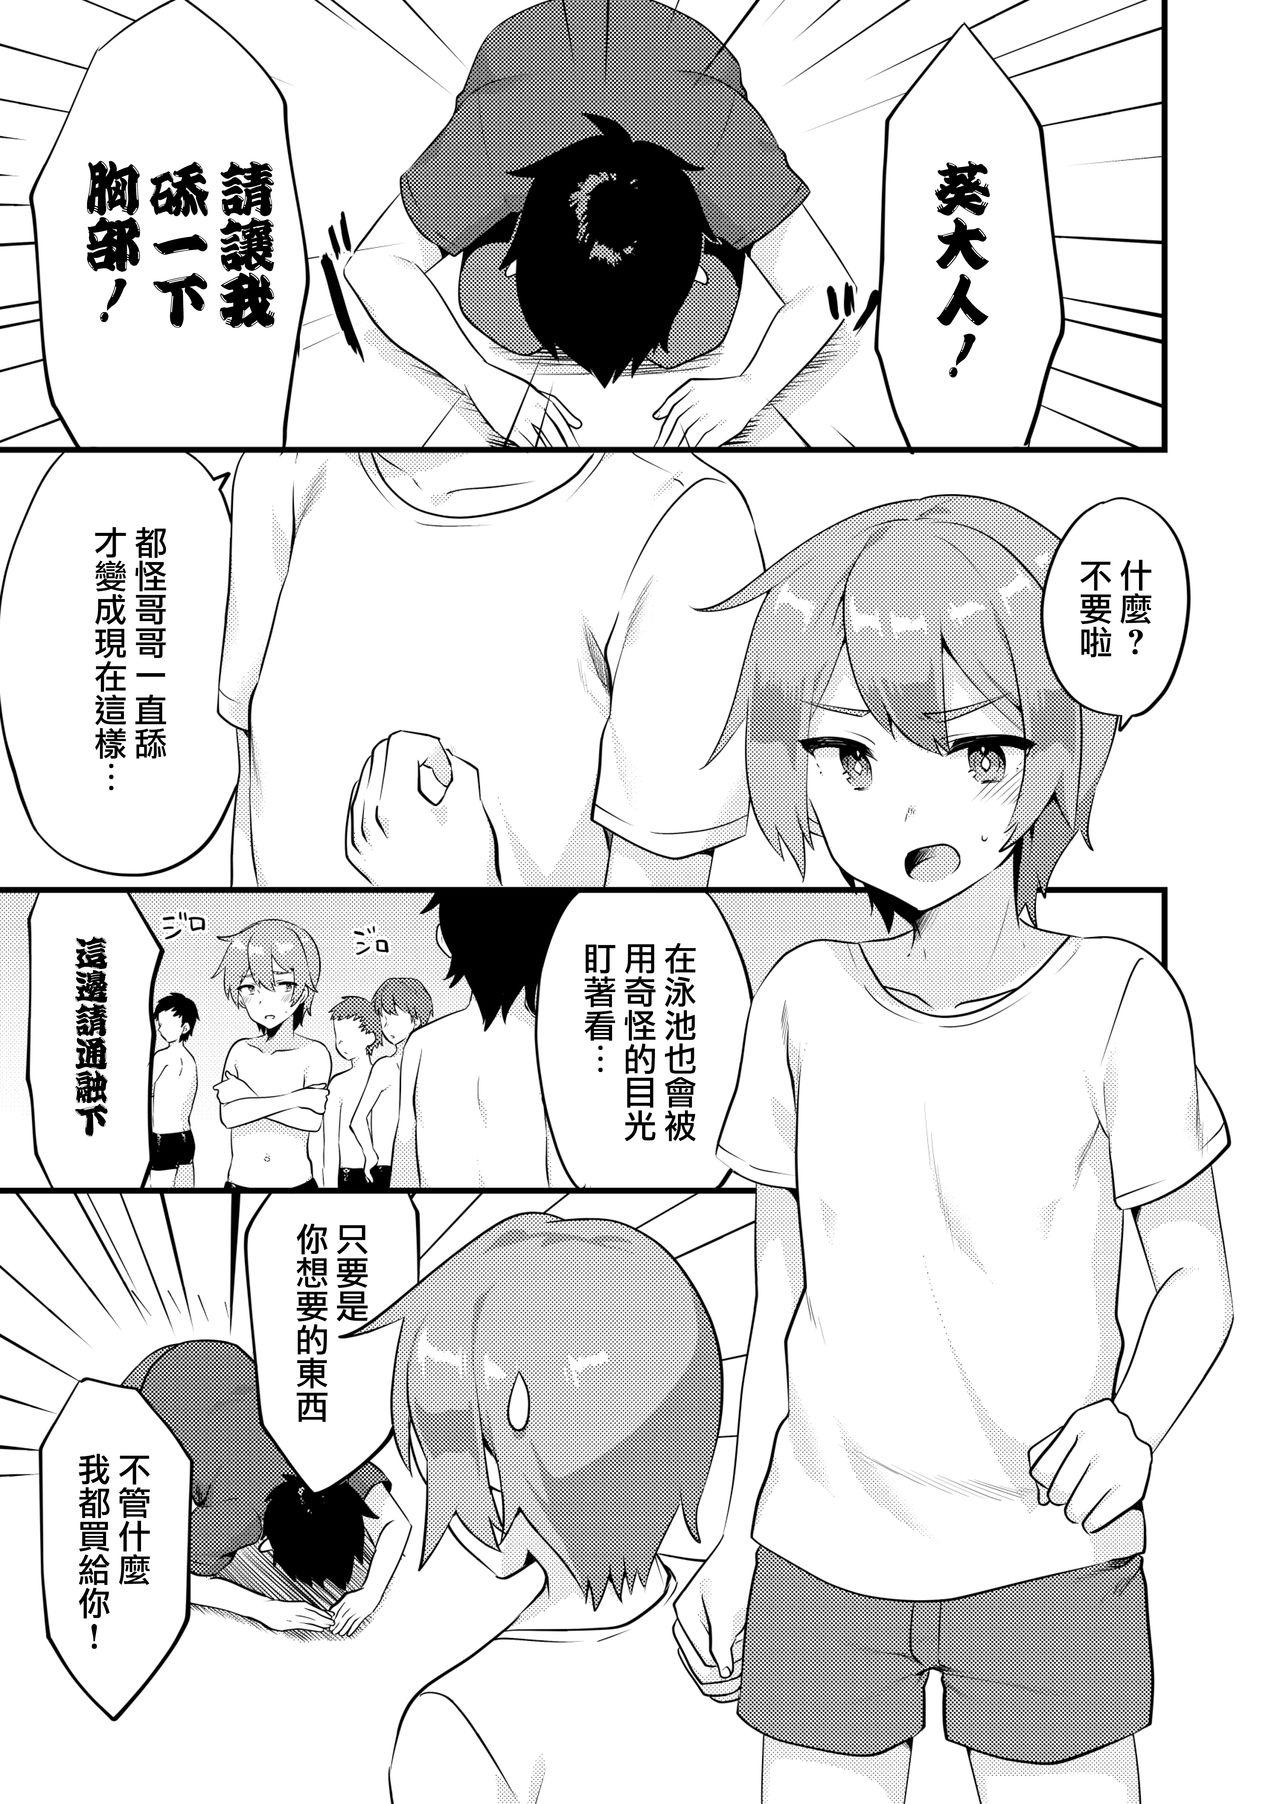 Sentones Kawaii Otokonoko no Oppai o Medetai | 想要愛撫可愛的男孩子的胸部 - Original Sub - Page 3